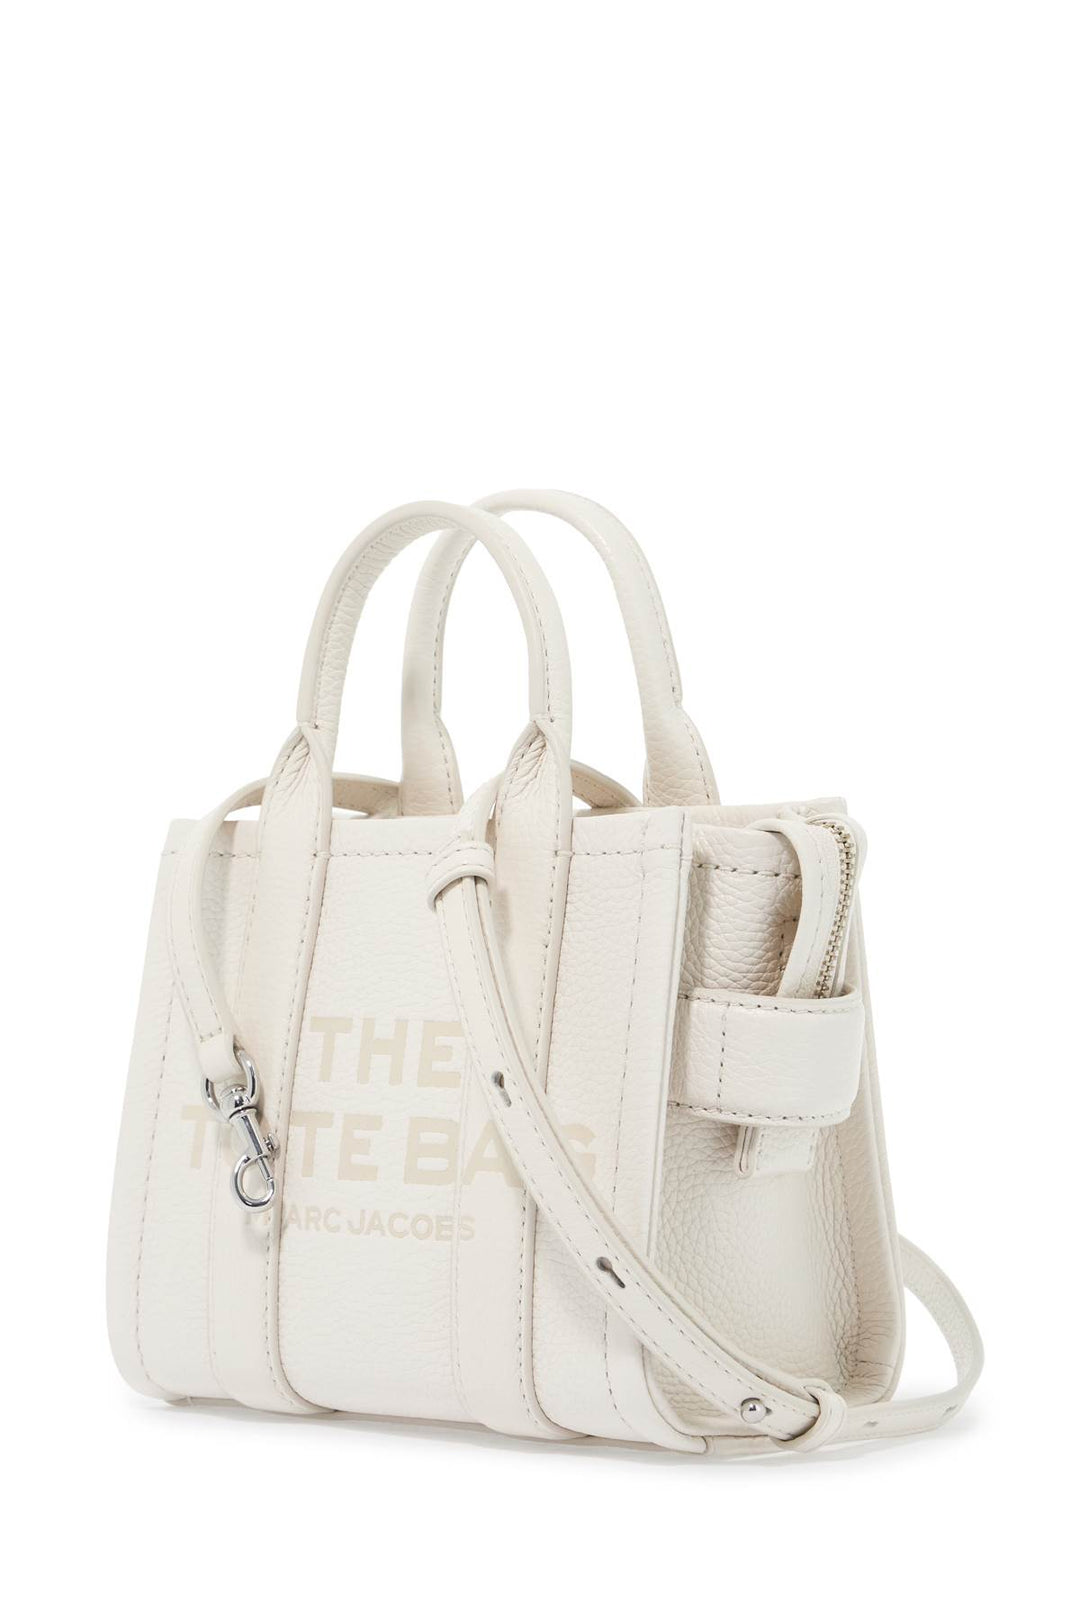 Marc Jacobs The Leather Mini Tote Bag   White